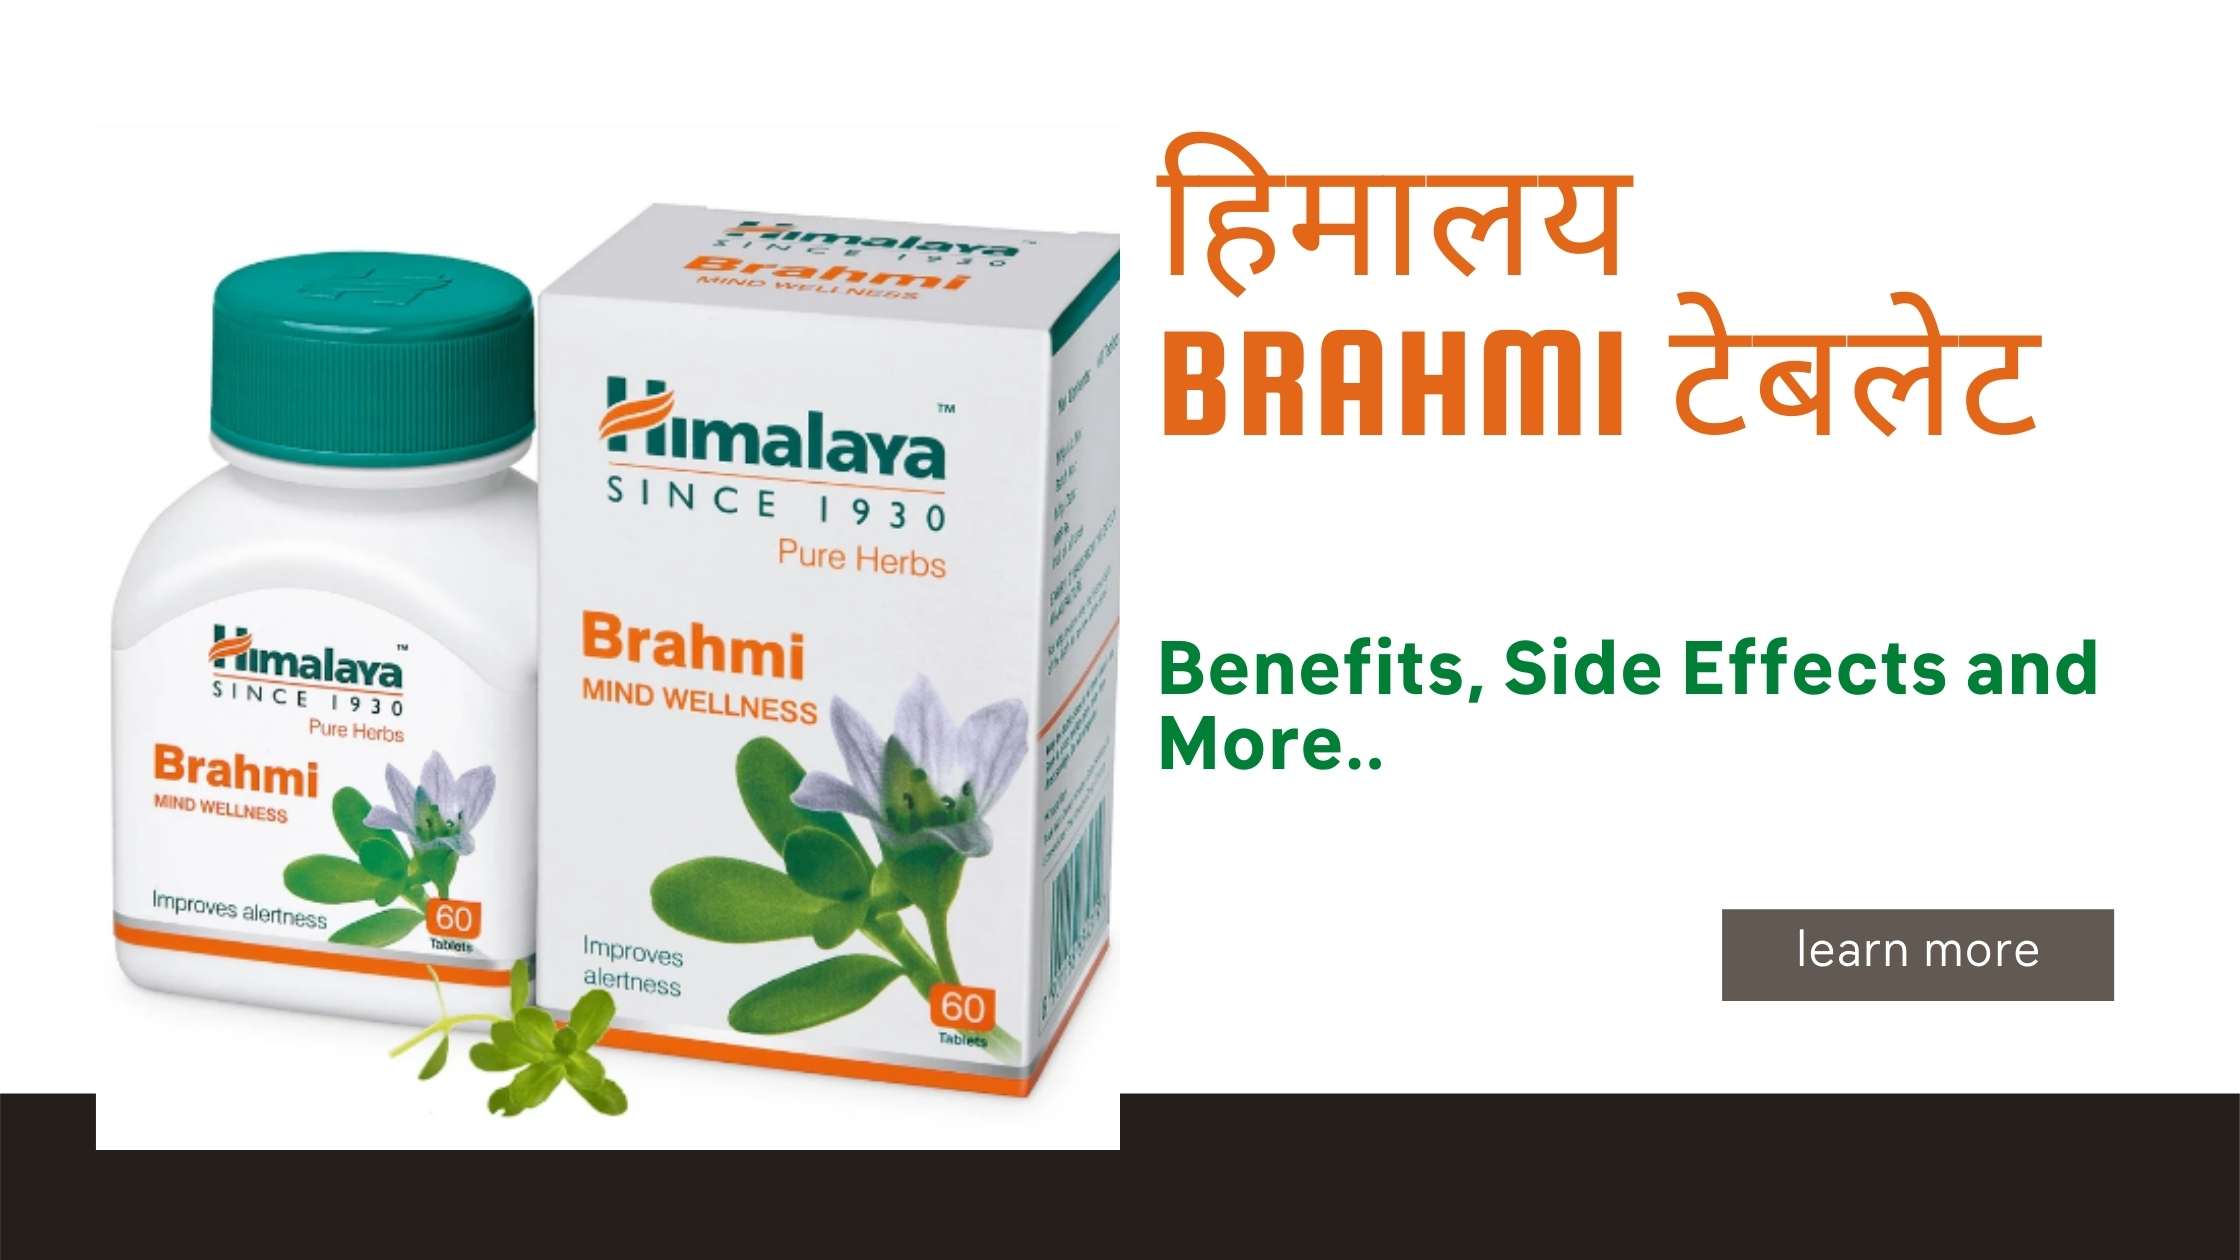 Benefits of himalaya brahmi tablet in hindi